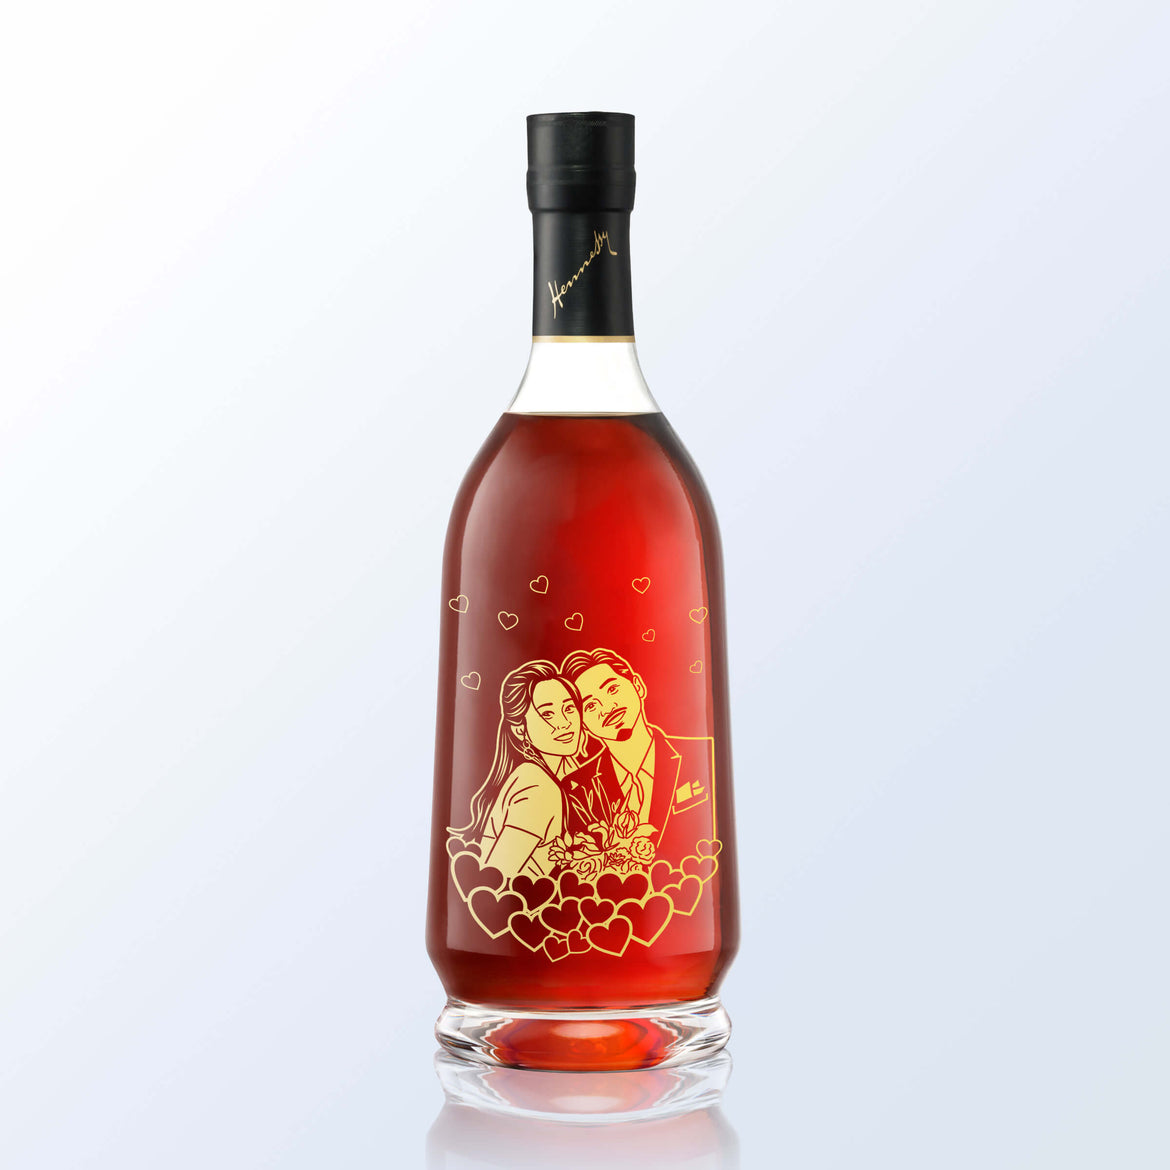 Hennessy V.S.O.P with Engraving | 軒尼詩V.S.O.P幹邑(含人像雕刻） - Design Your Own Wine